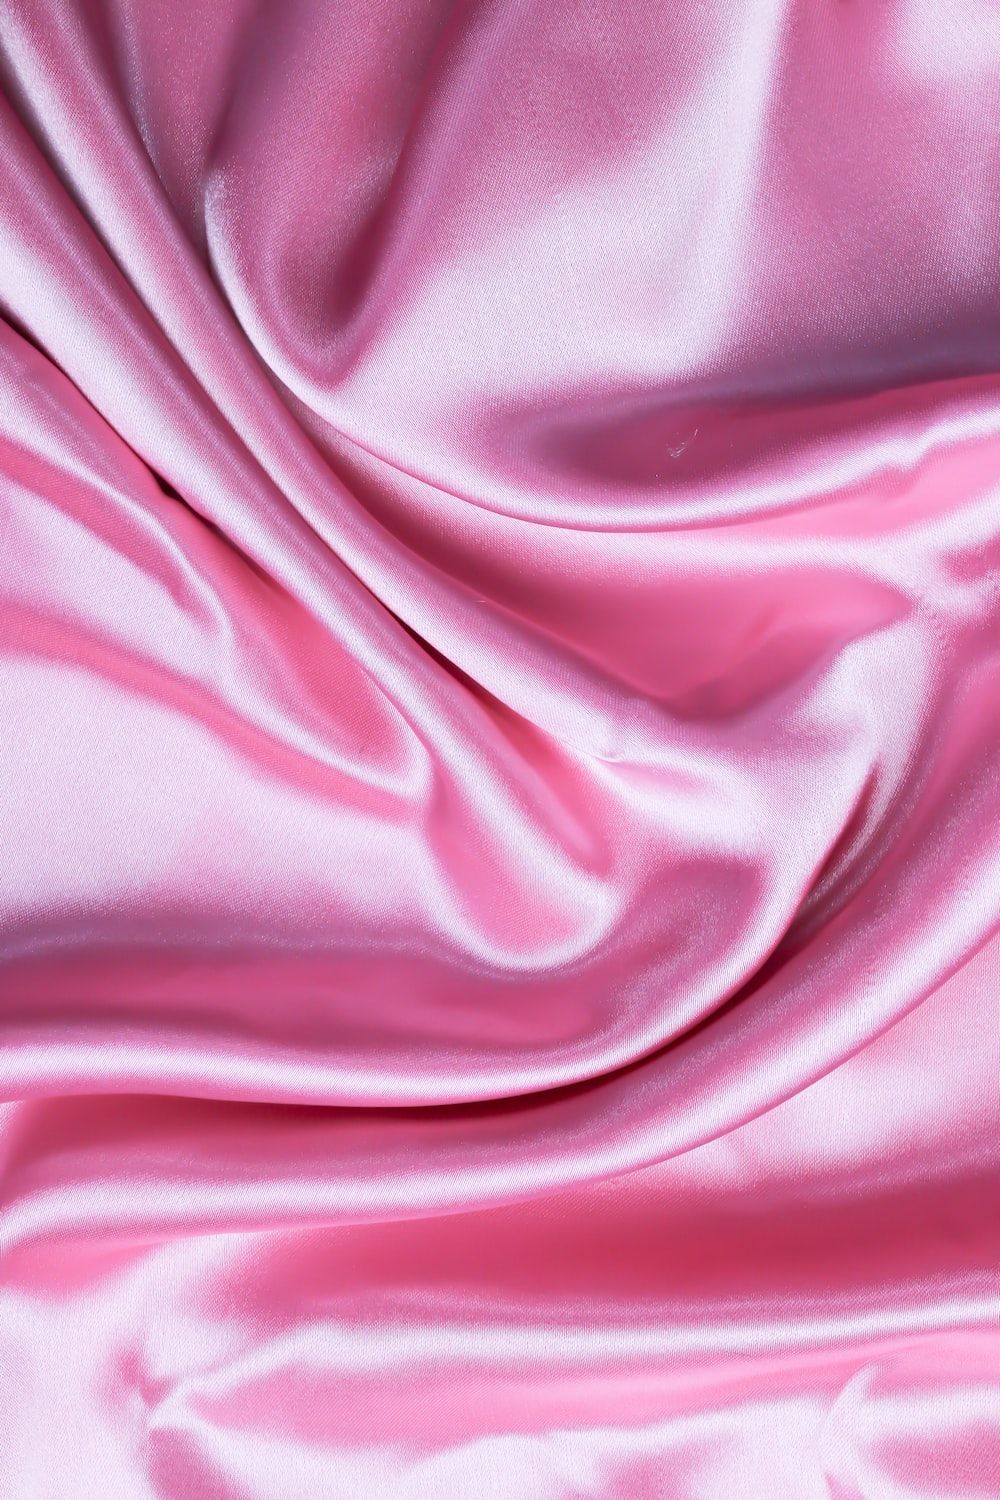 A close up of a pink silk material - Silk